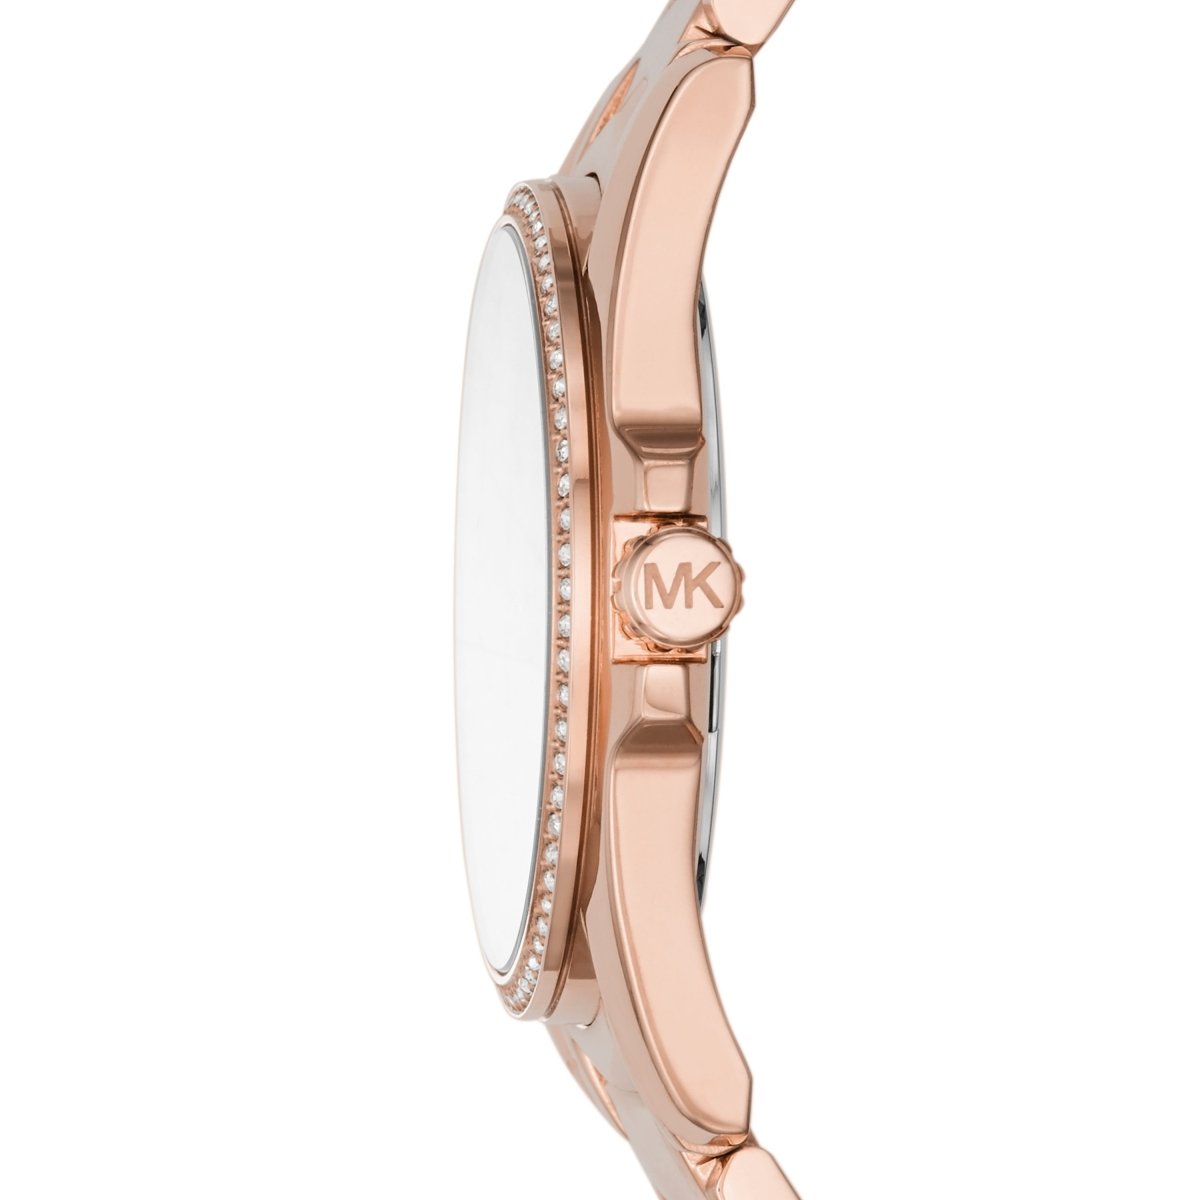 Michael Kors MK6694 Whitney Rose Gold Stainless Steel Watch - Κοσμηματοπωλείο Goldy